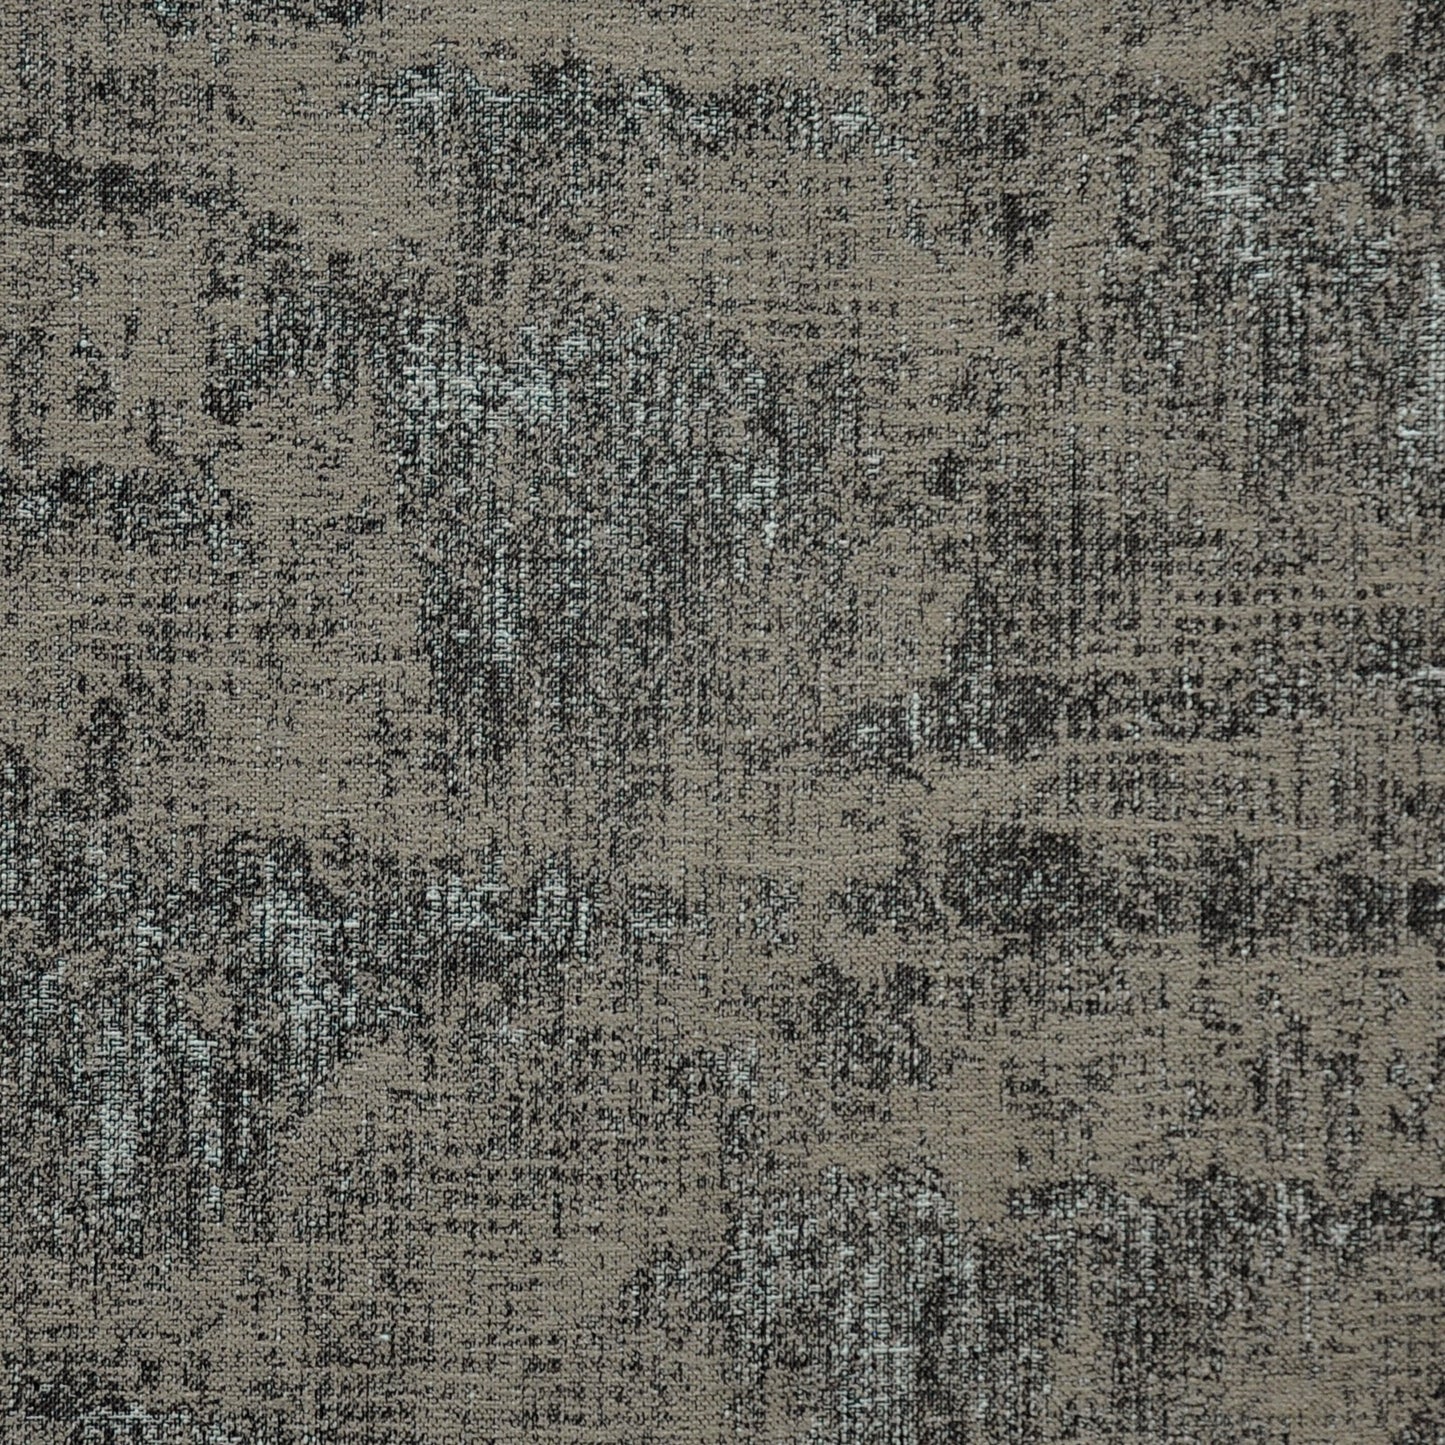 Purchase Maxwell Fabric - Saguaro, # 821 Sepia